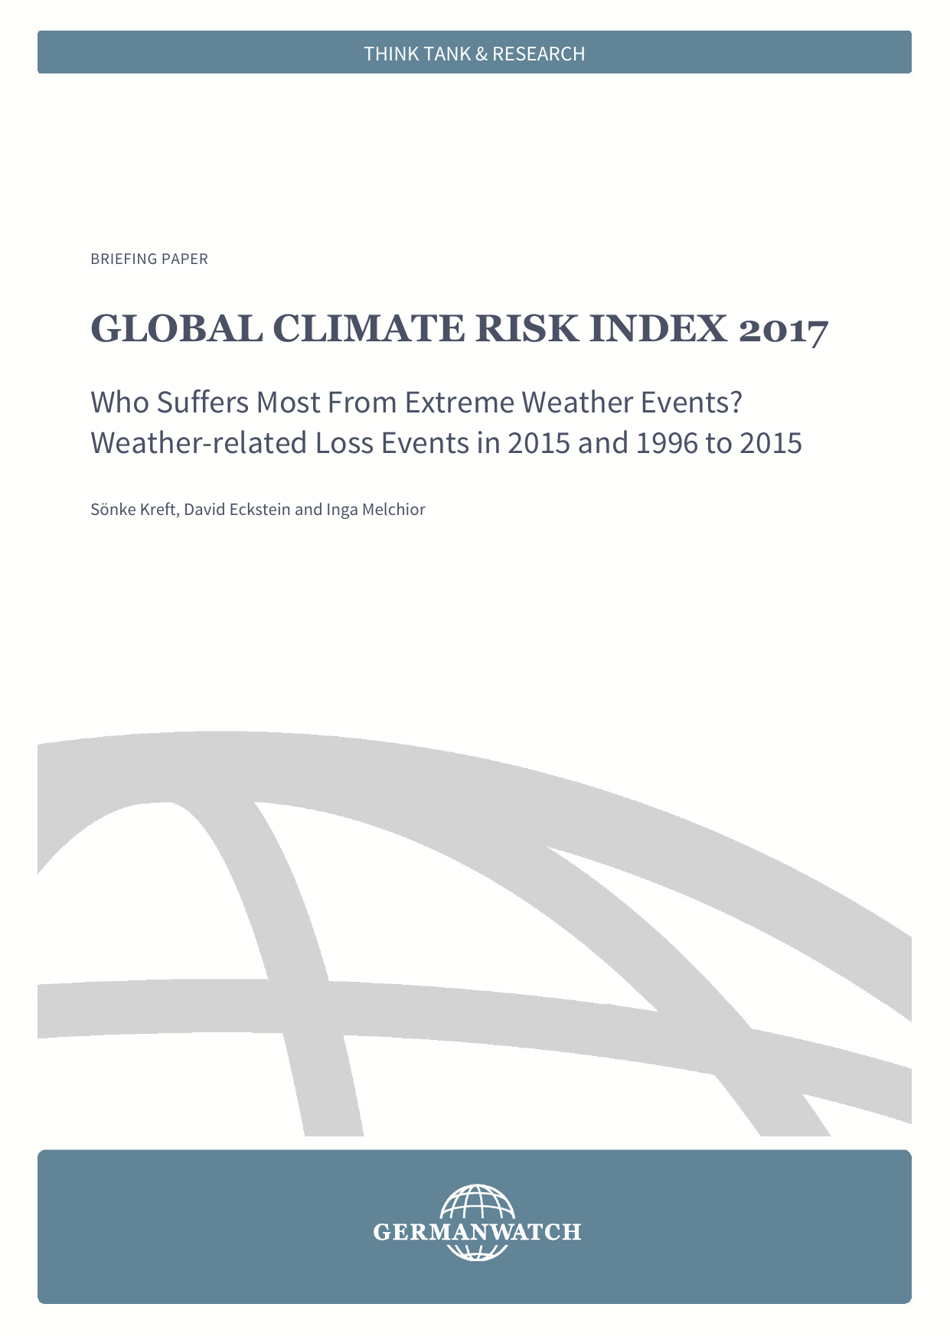 Global Climate Risk Index - Sonke Kreft, David Eckstein and Inga Melchior, Germanwatch